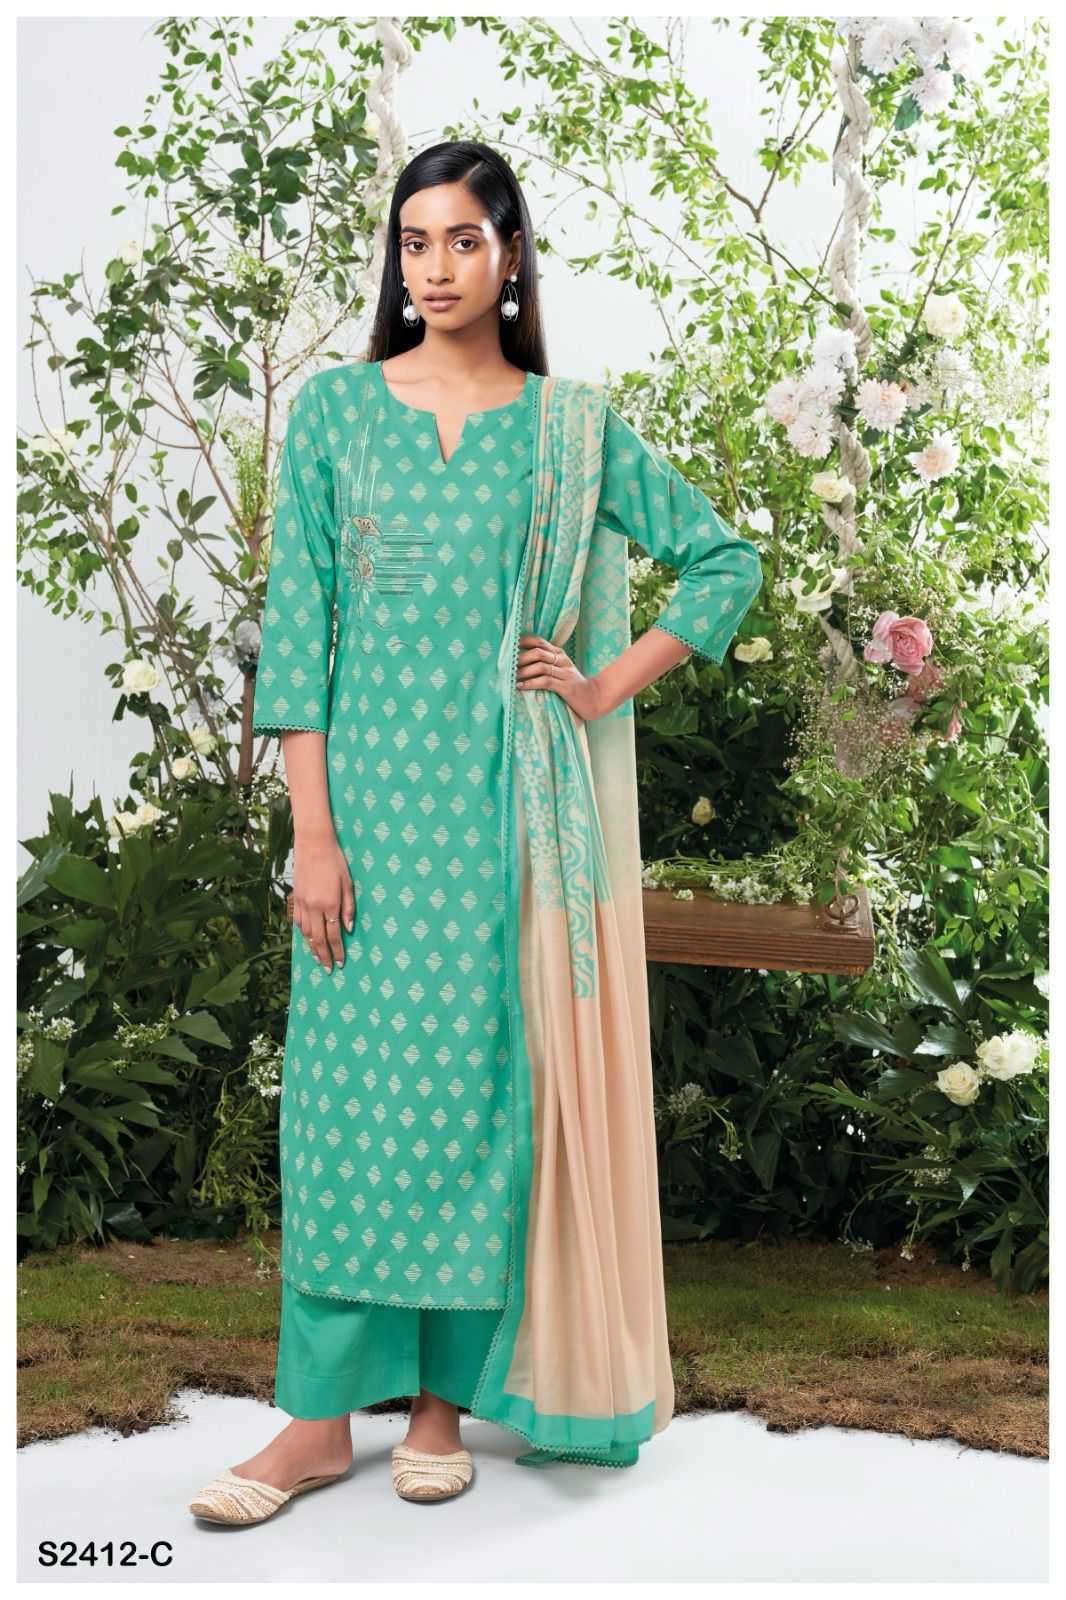 Ganga WILMER 2412 Dress Materials Wholesale catalog